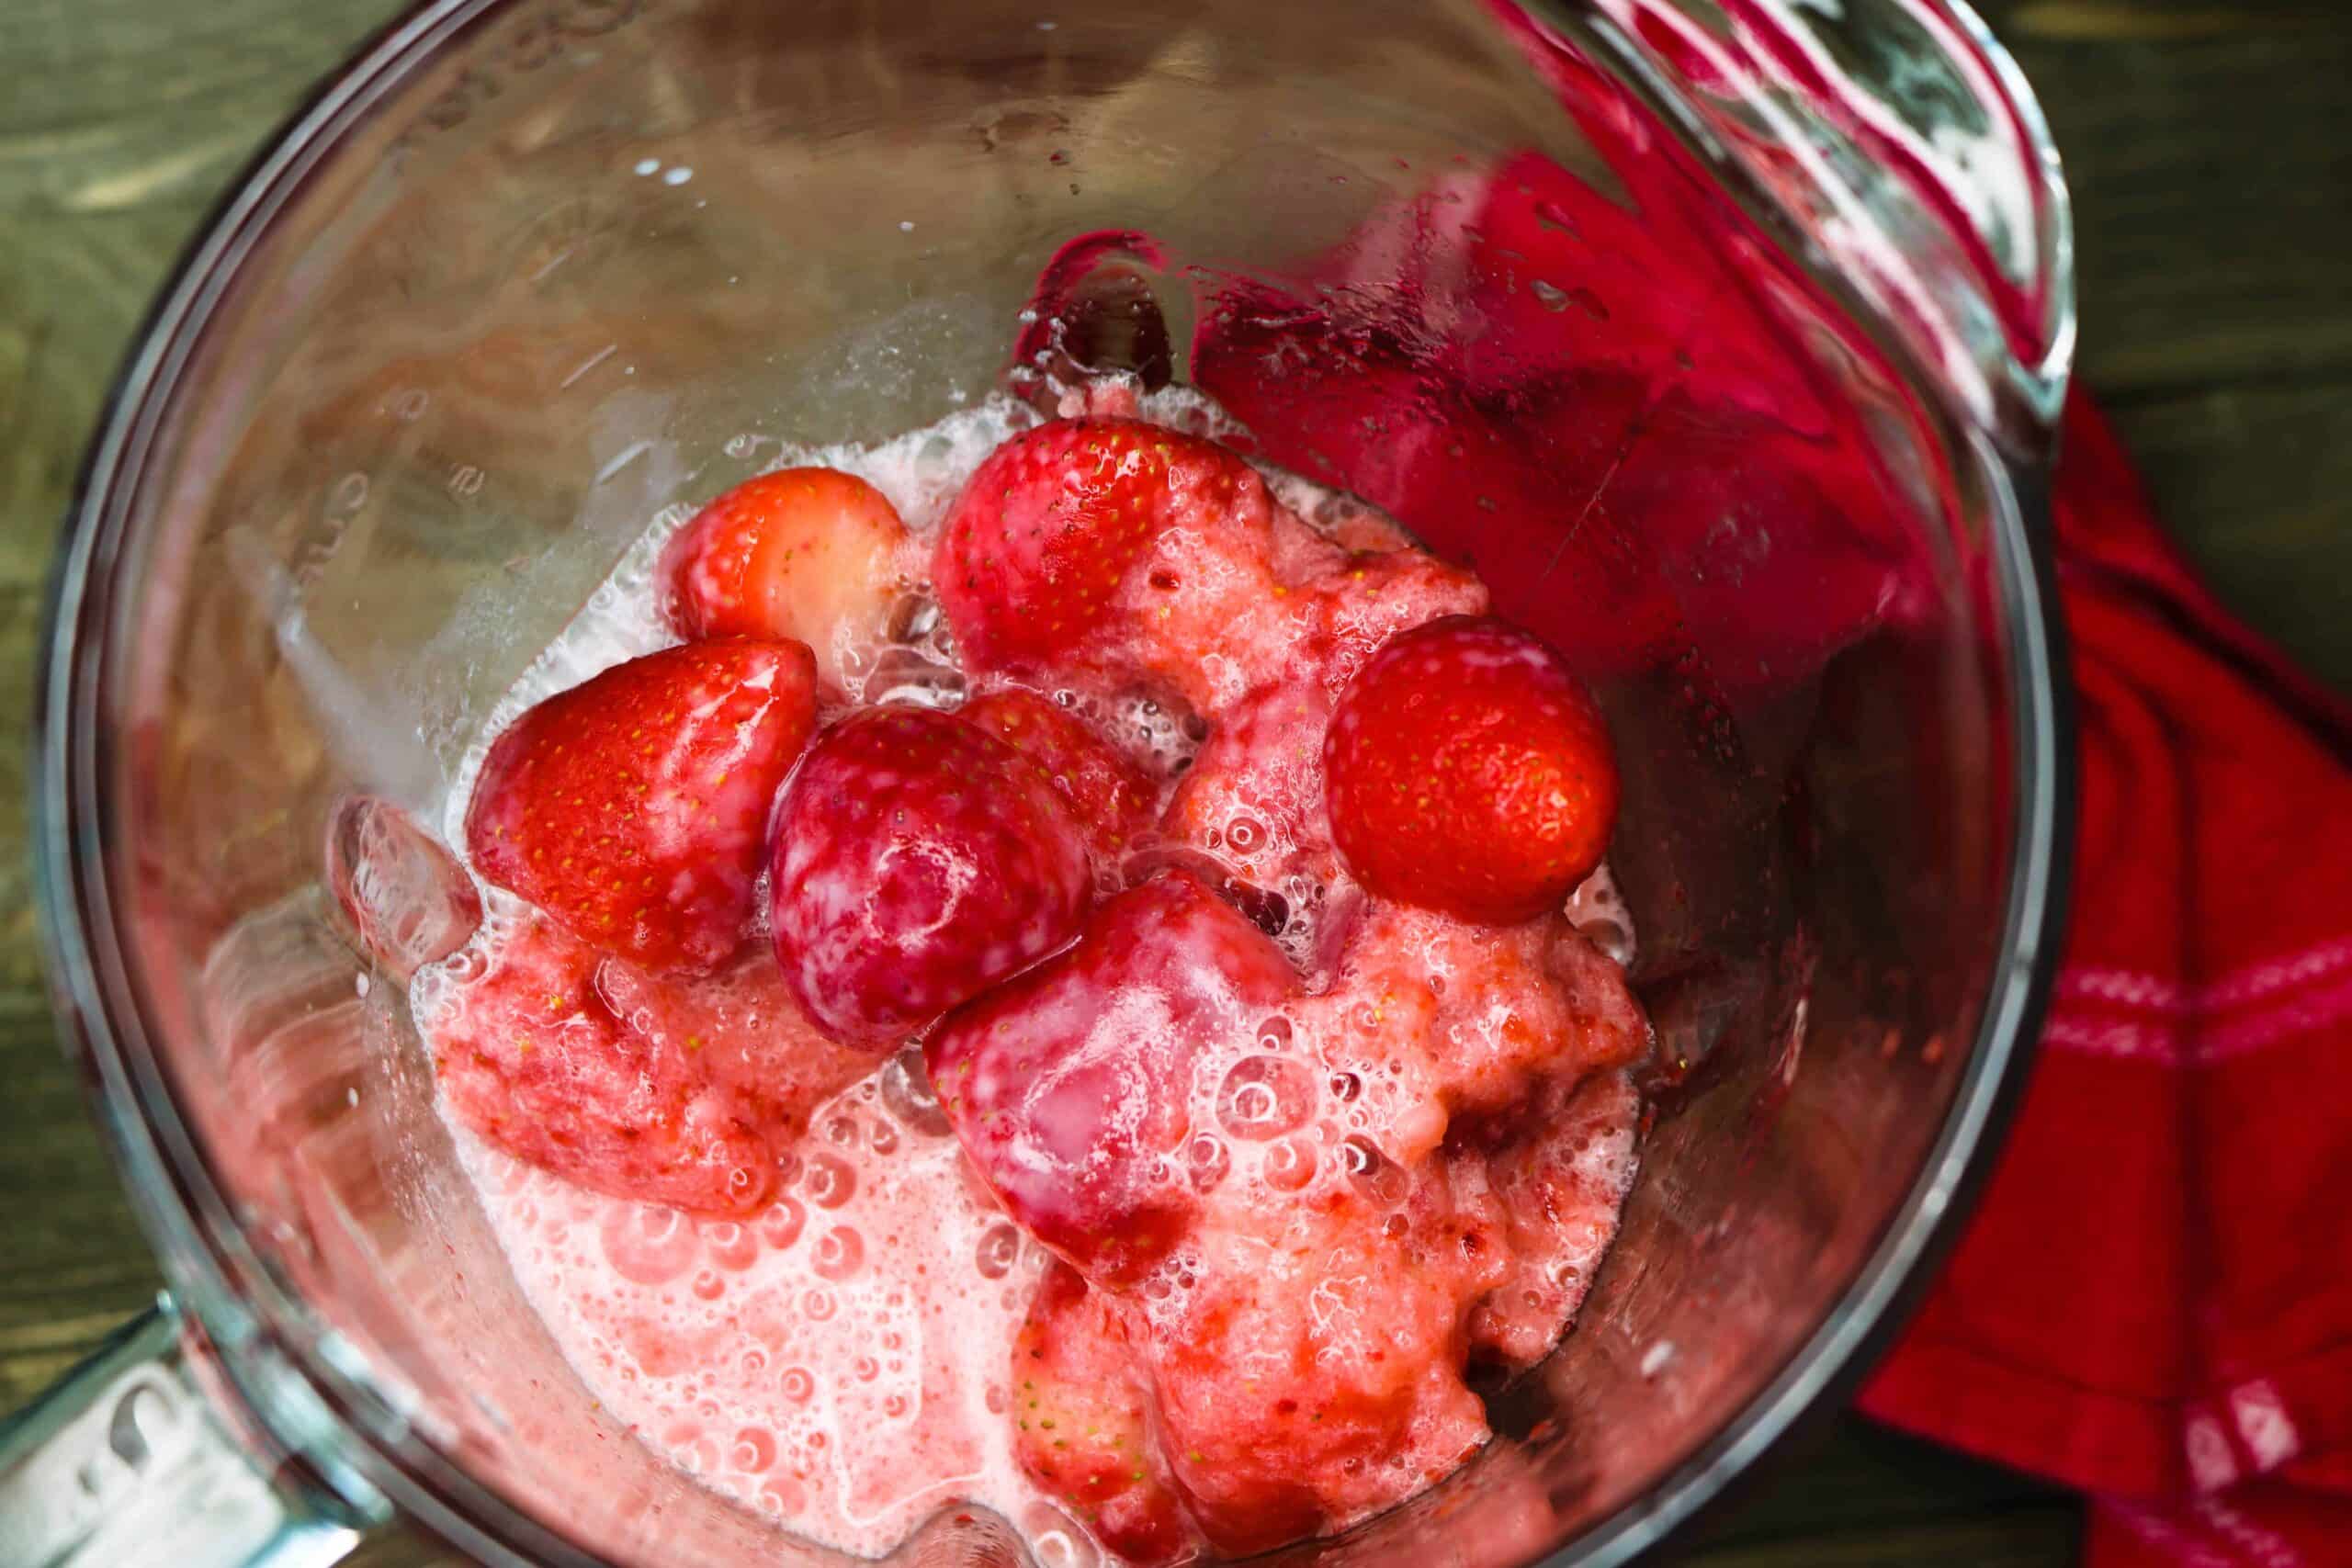 Strawberries, lemon juice and almond milk inside a blender